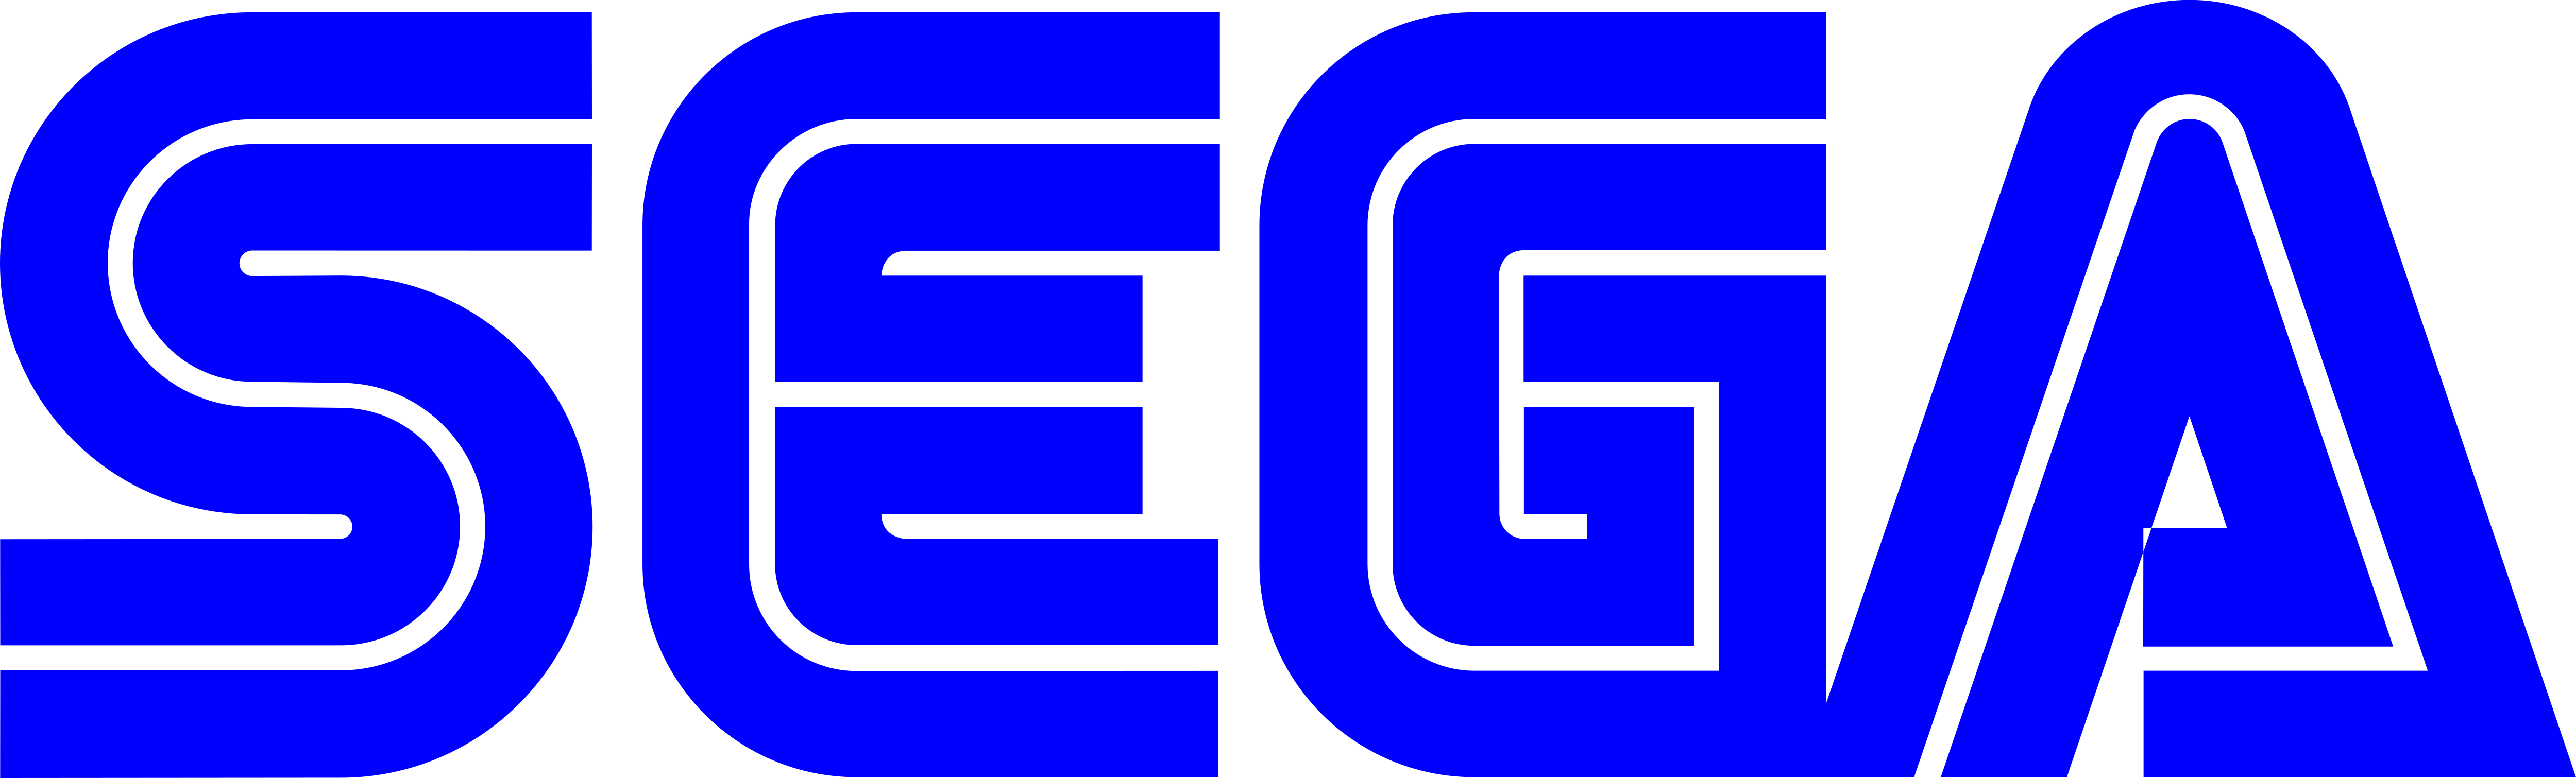 Sega | Awesome Games Wiki | Fandom